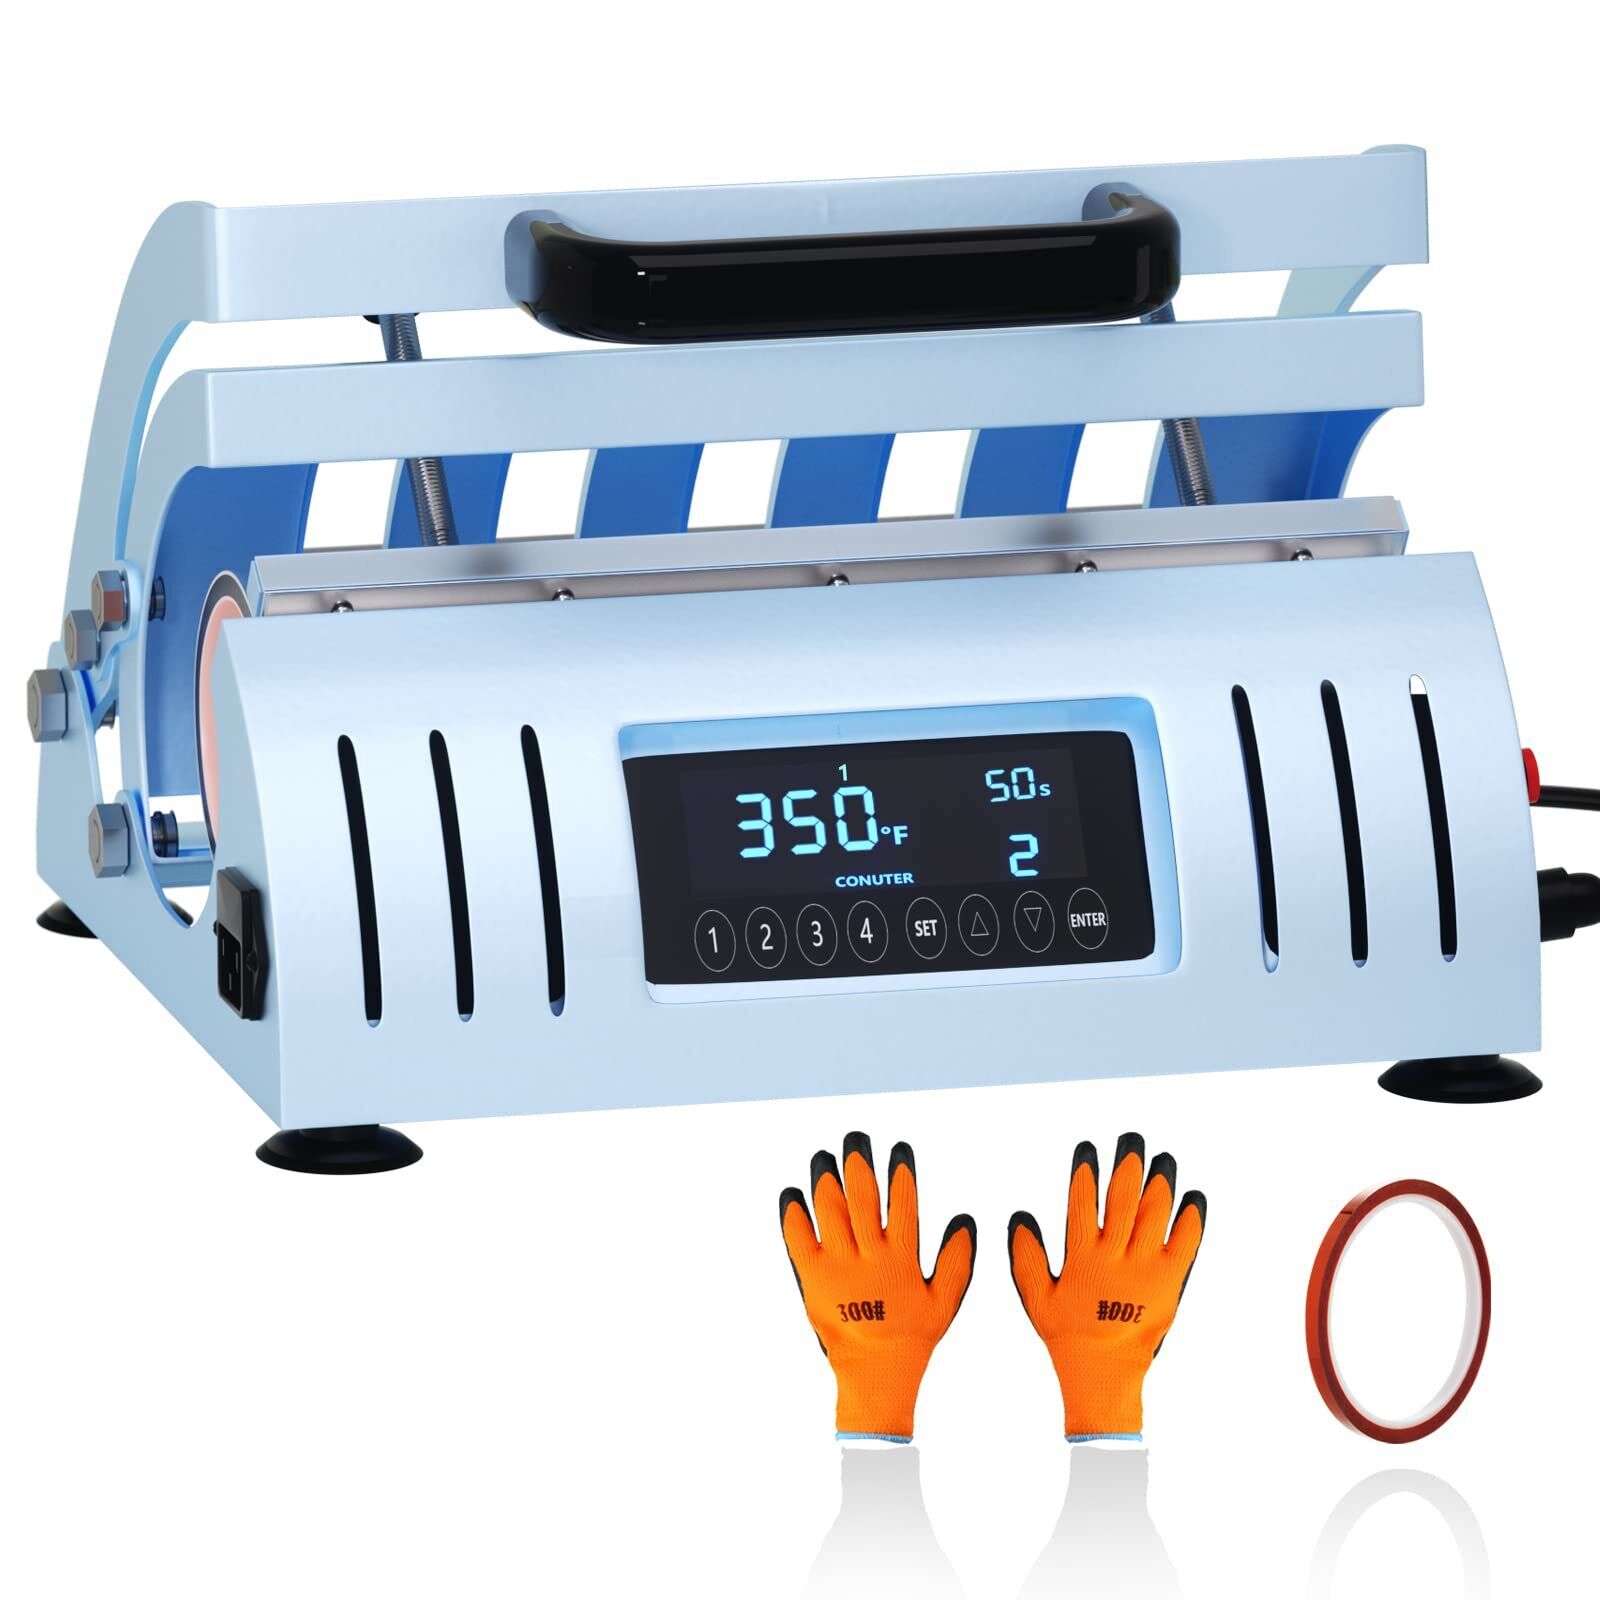 Tumbler Heat Press Machine for Dye Sublimation - 11-30oz with 4 Adjustable Me...